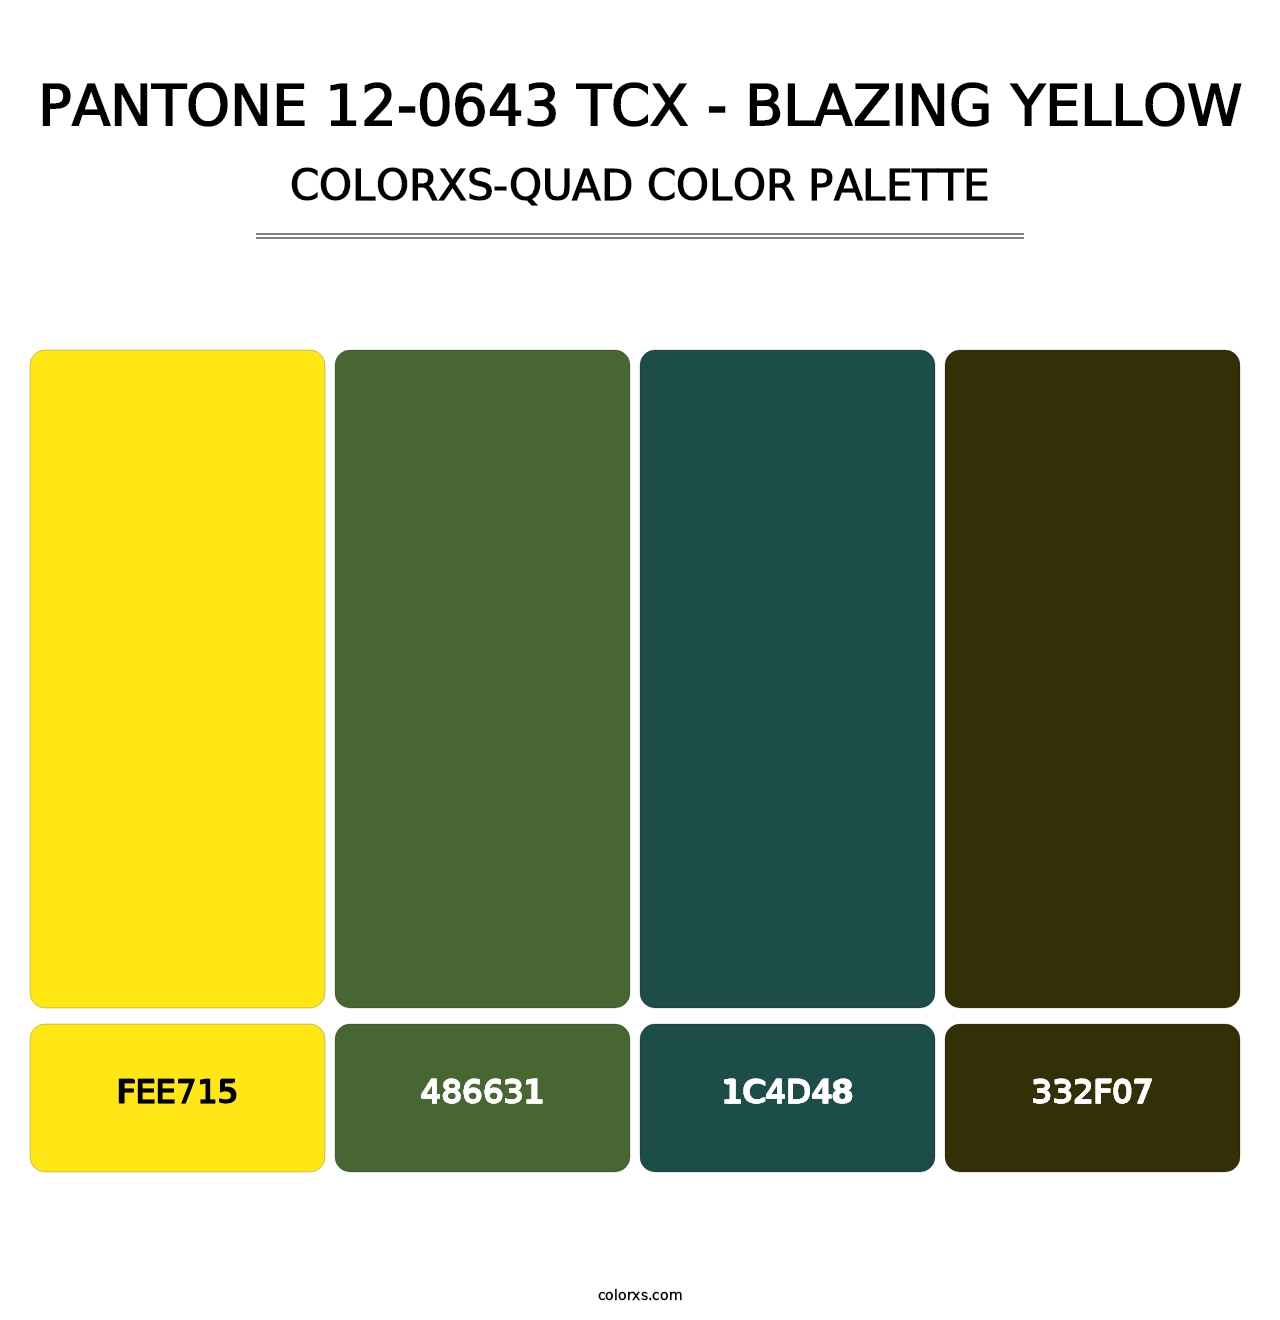 PANTONE 12-0643 TCX - Blazing Yellow - Colorxs Quad Palette